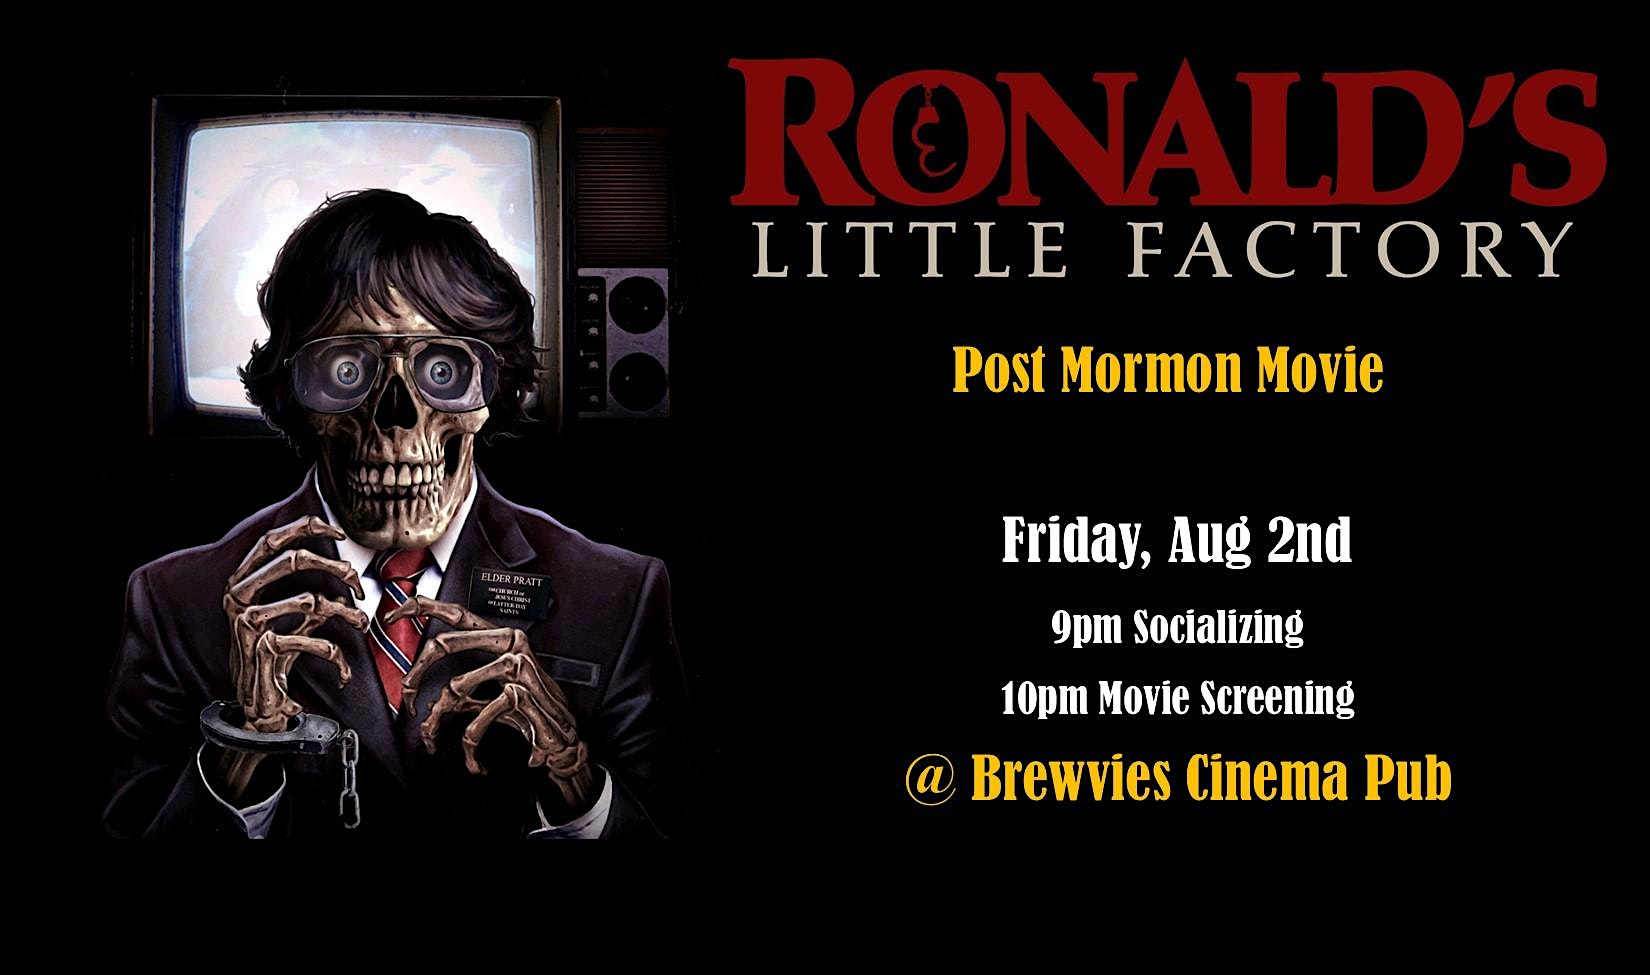 Ronald's Little Factory - Post Mormon Movie Event